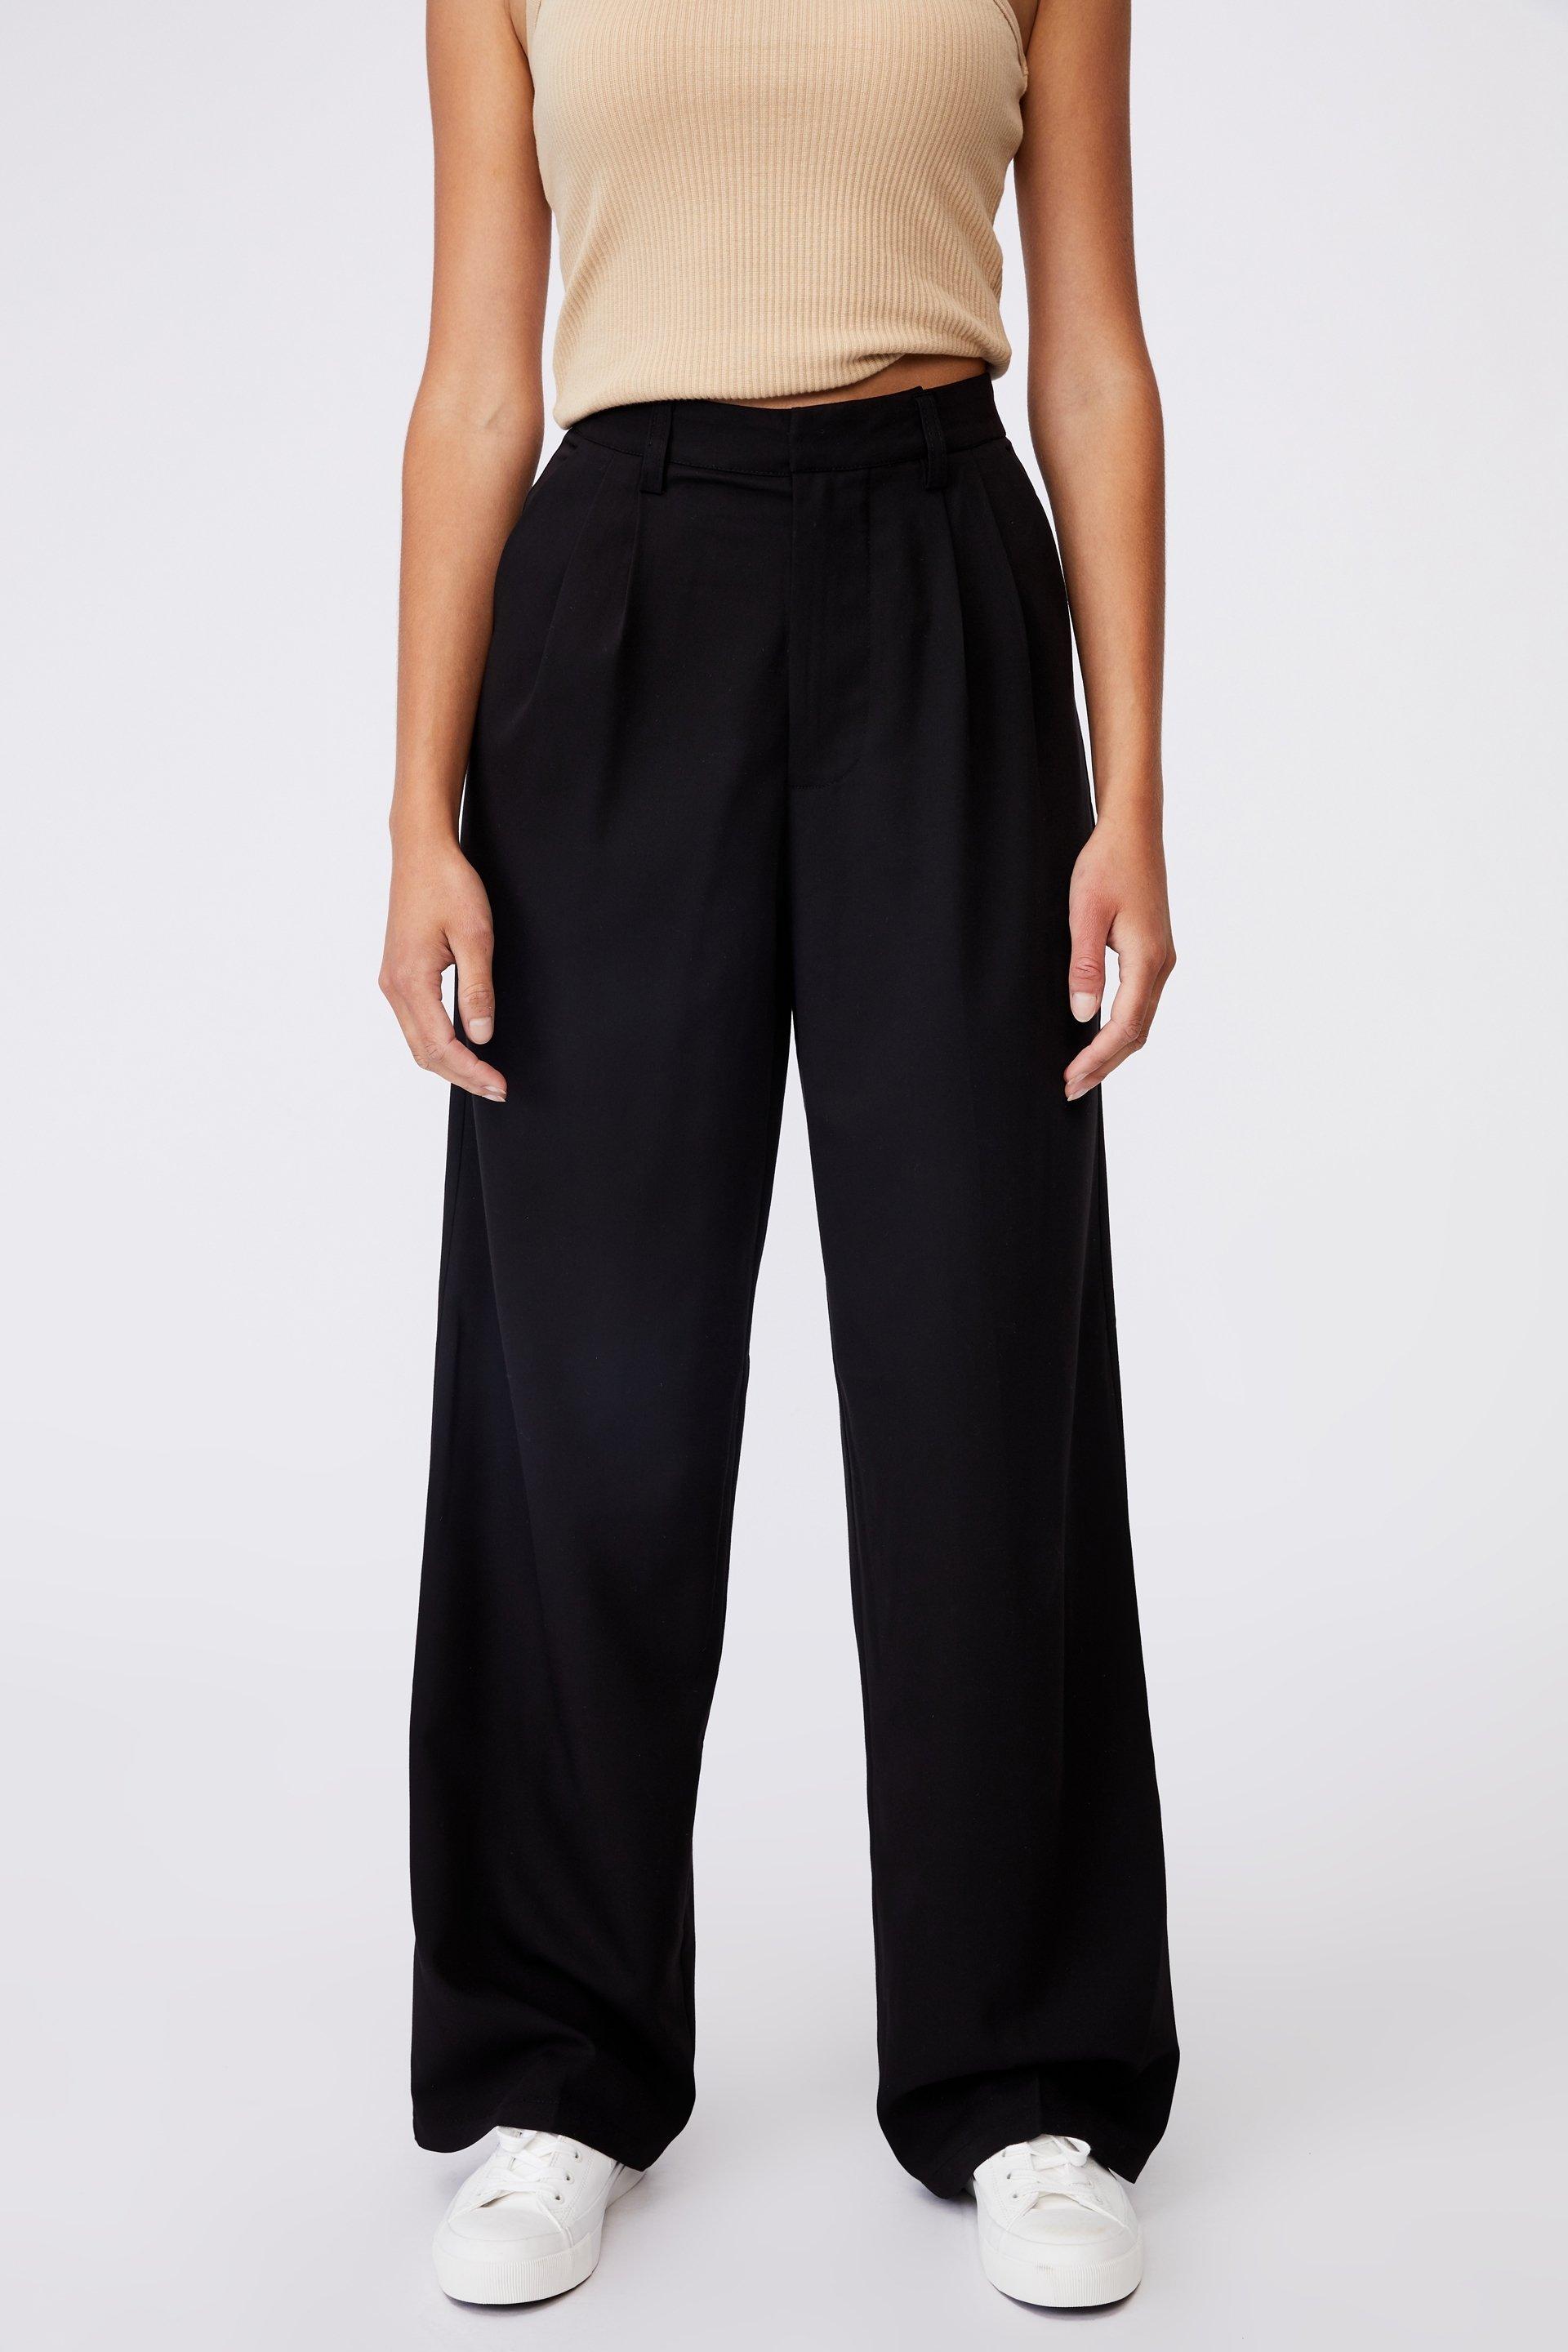 Jordan oversized pleat pants - black Cotton On Trousers | Superbalist.com